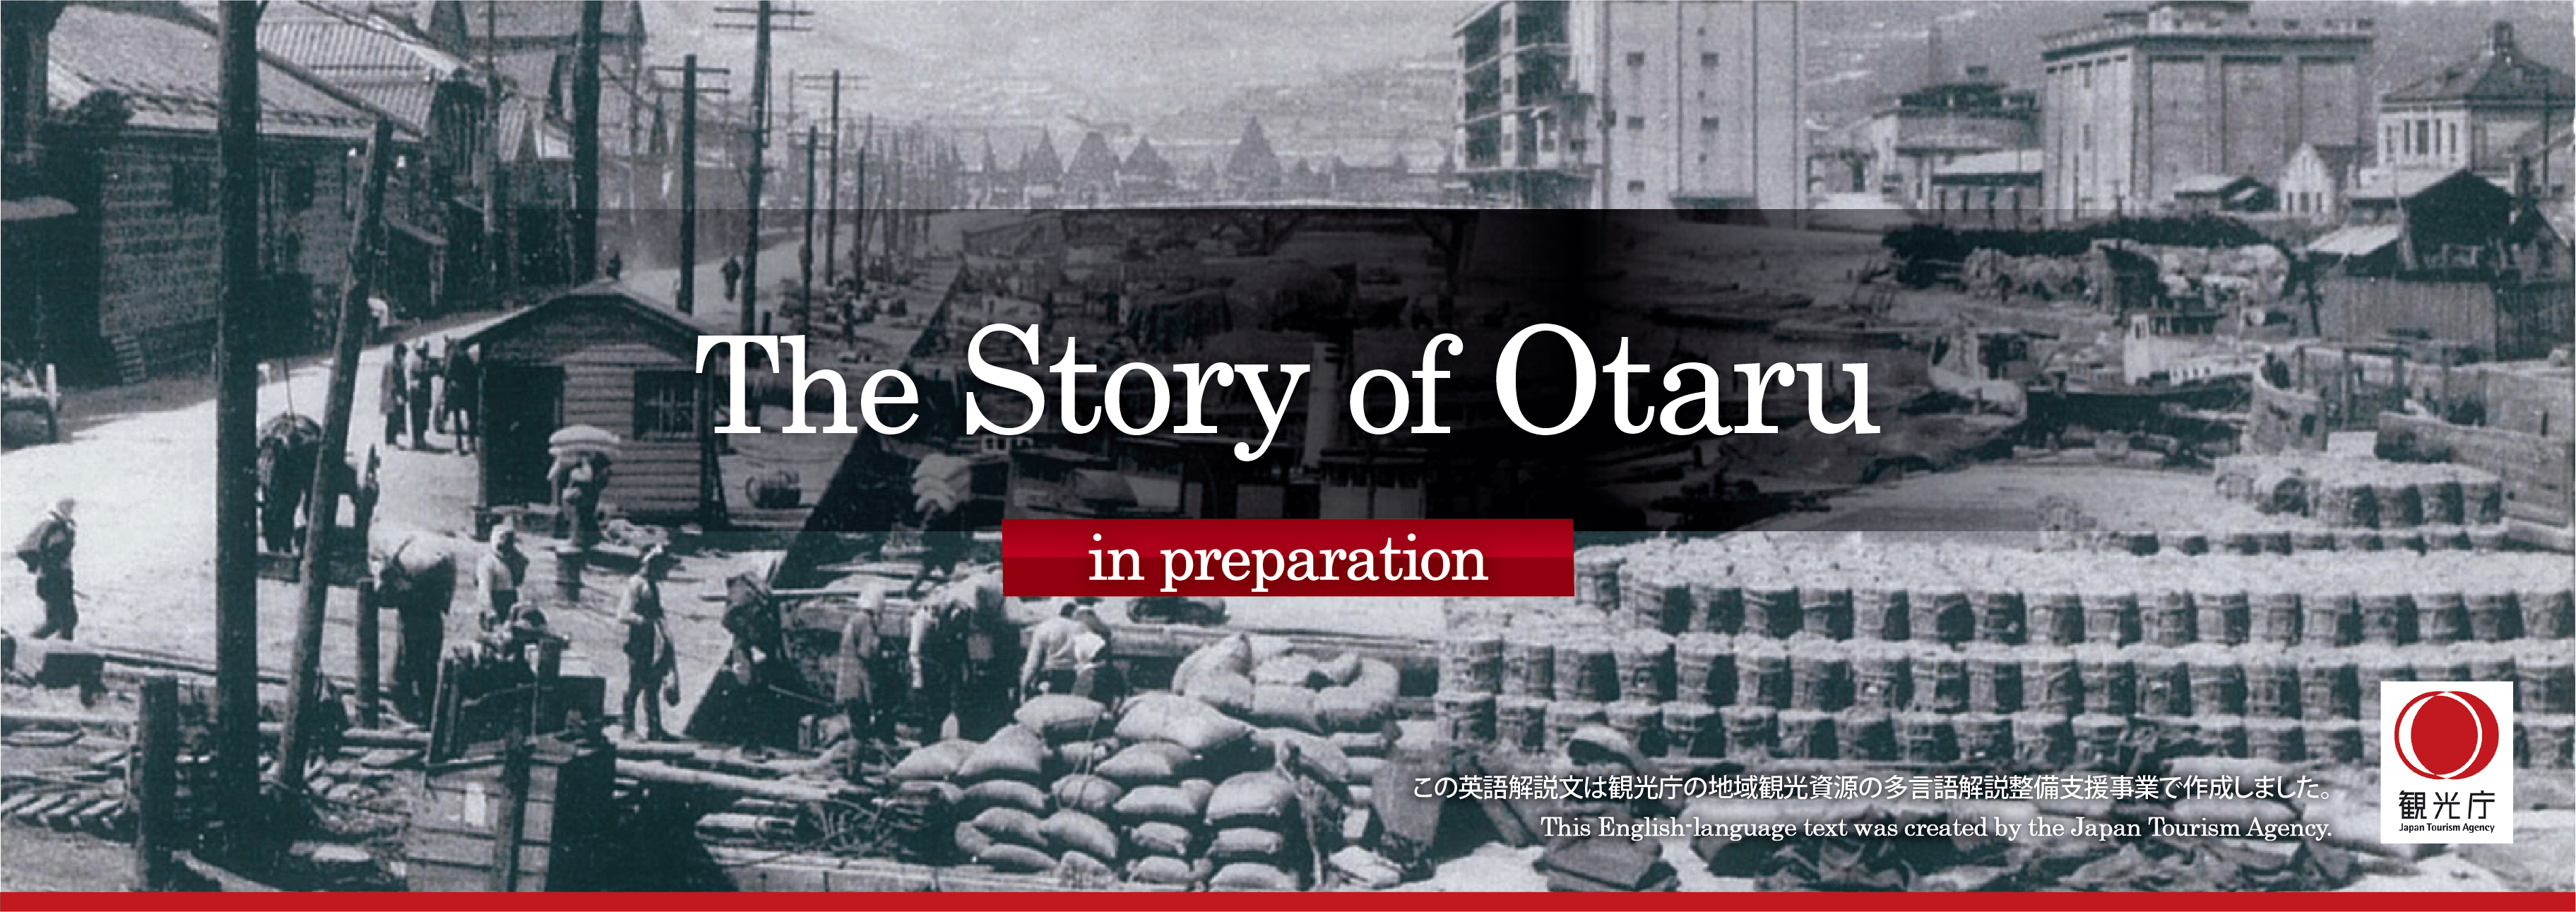 The Story of Otaru